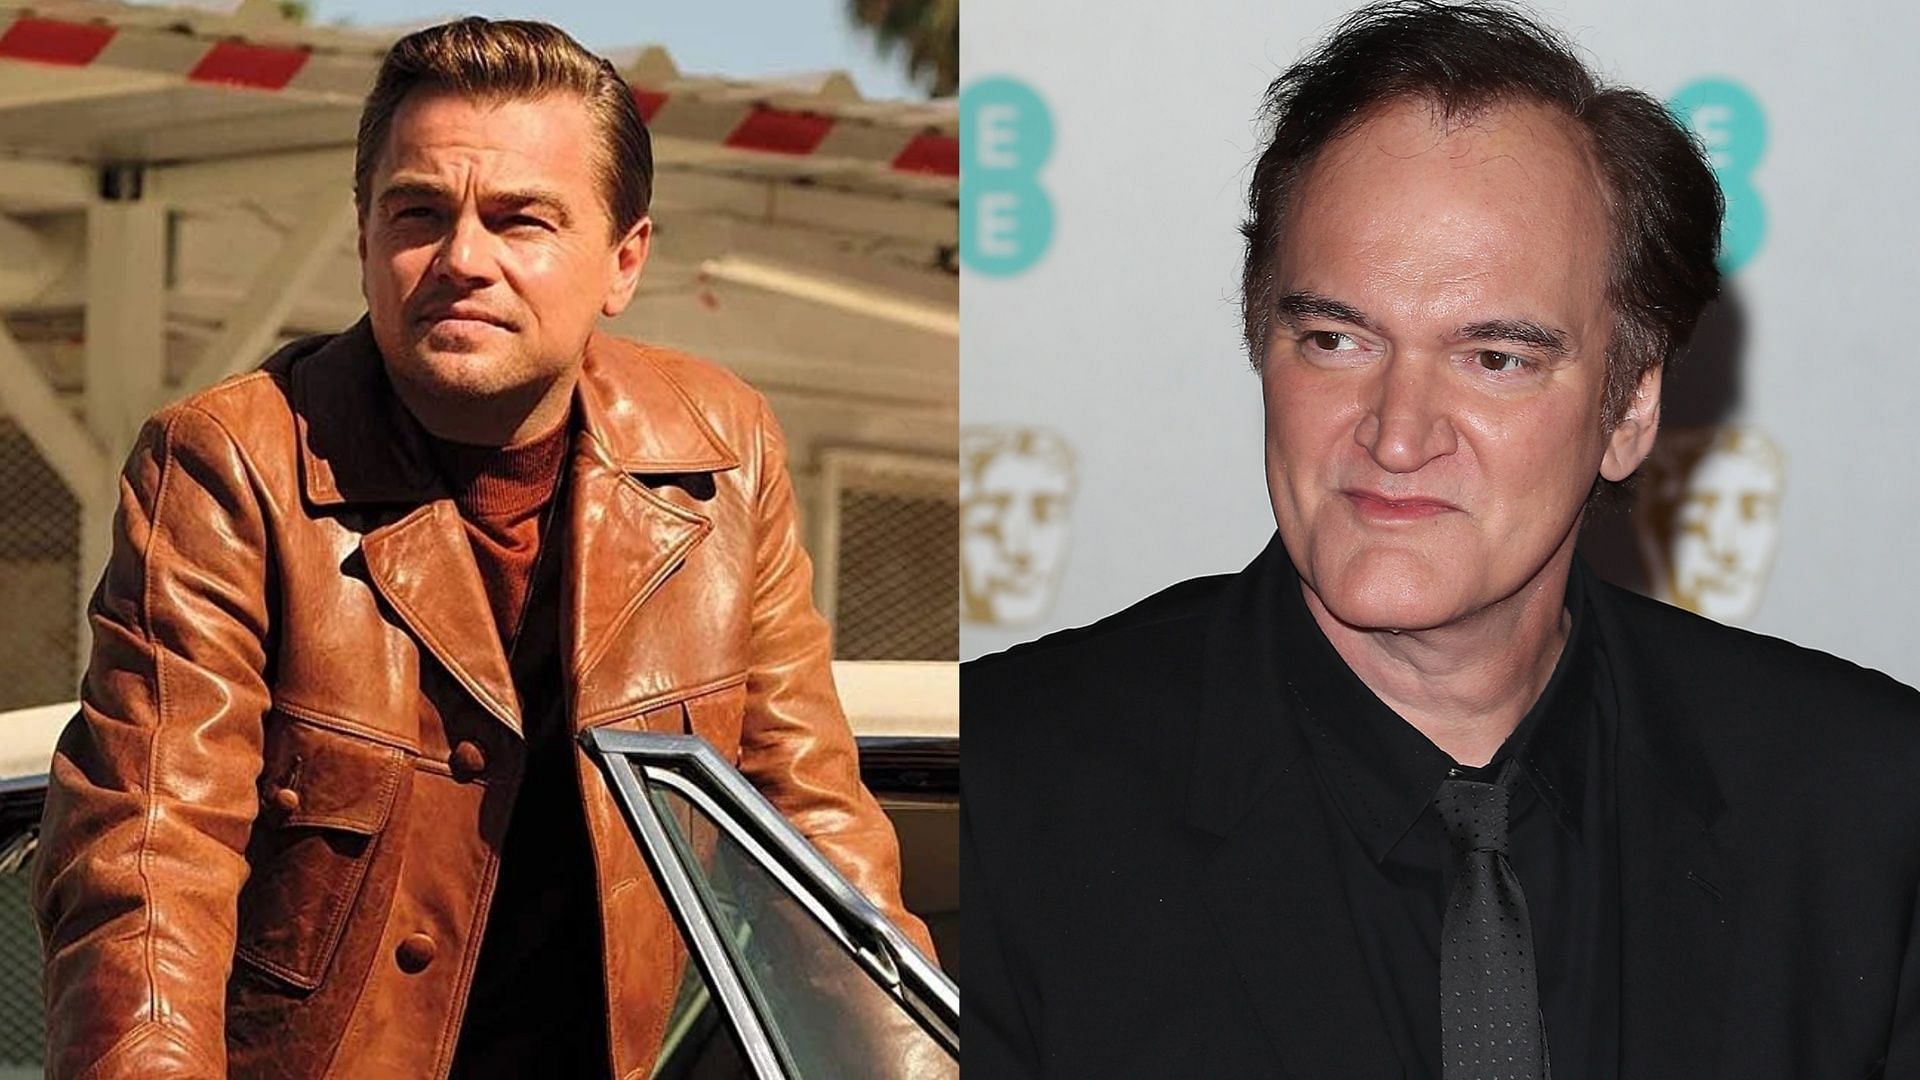 Rick Dalton (played by Leonardo DiCaprio) and Quentin Tarantino. (Photo via @brendan_kraus/Twitter, Getty Images)